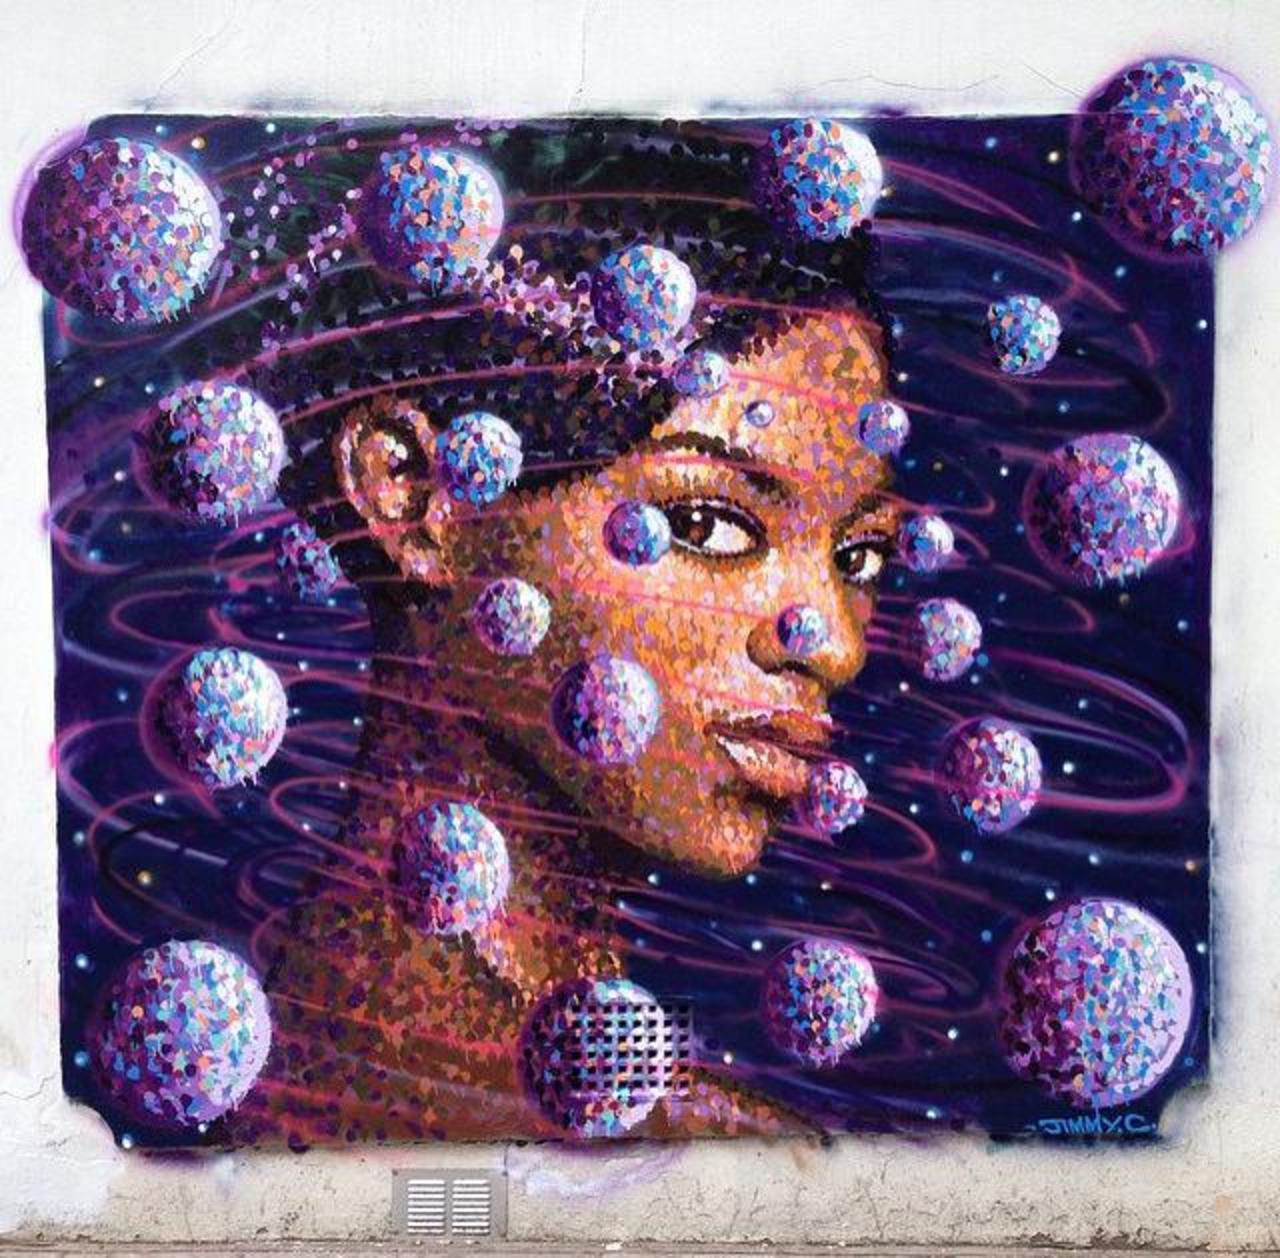 New Street Art by JimmyC in Brixton, London

#art #arte #graffiti #streetart http://t.co/CU9CgPpSZf